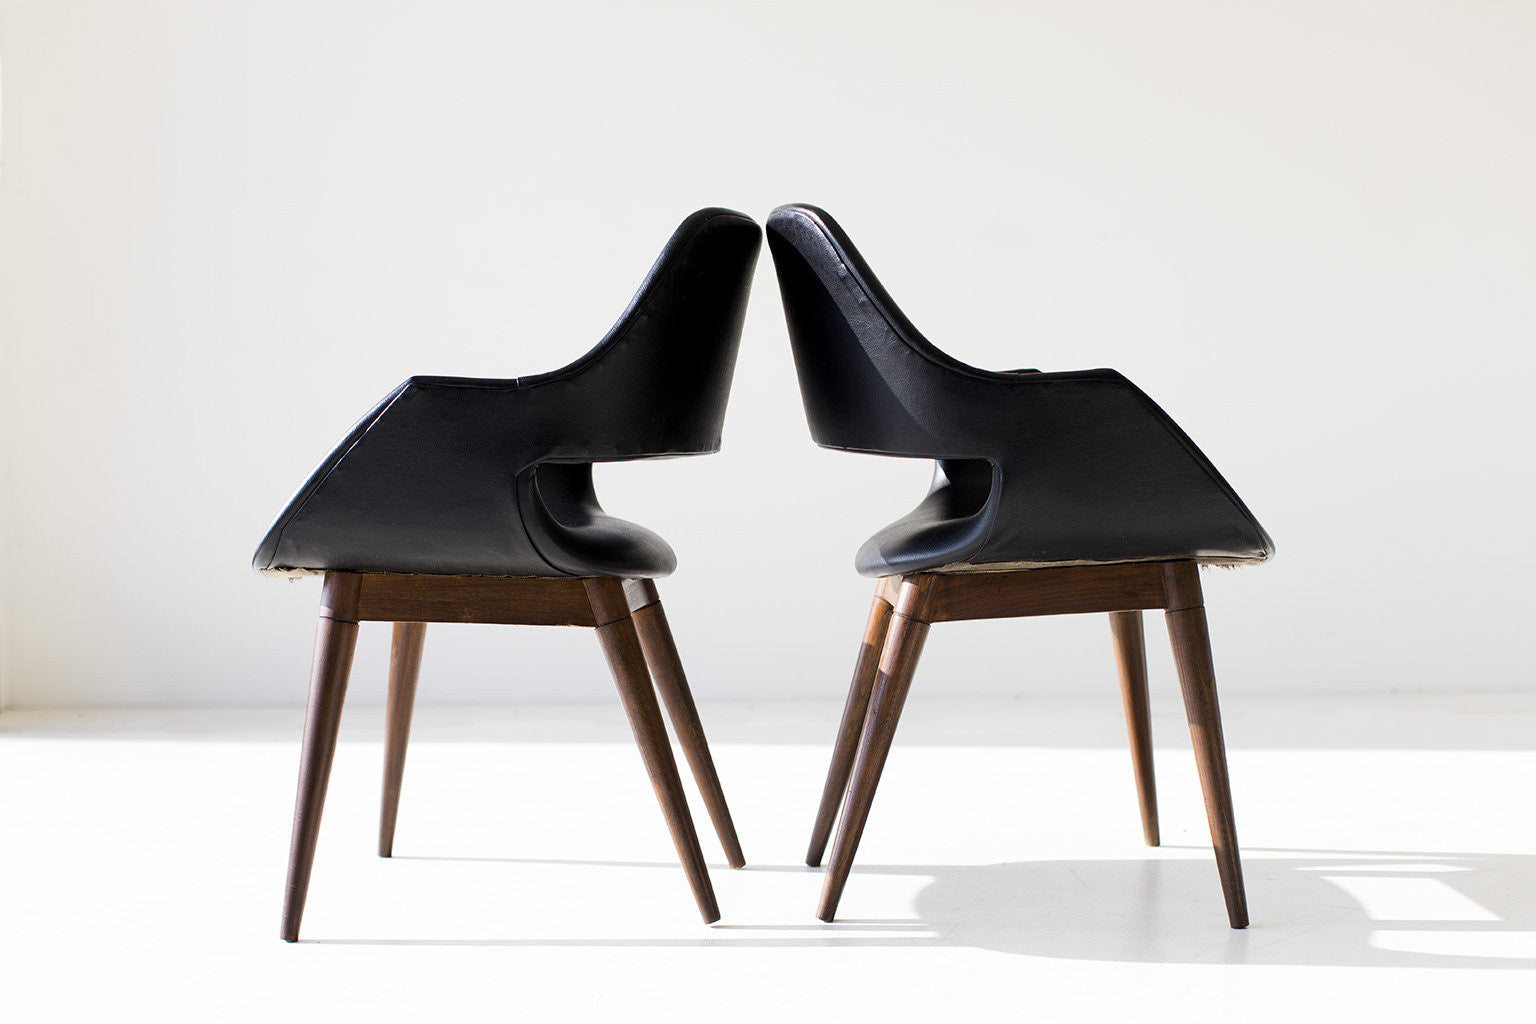 arthur-umanoff-chairs-madison-furniture-08